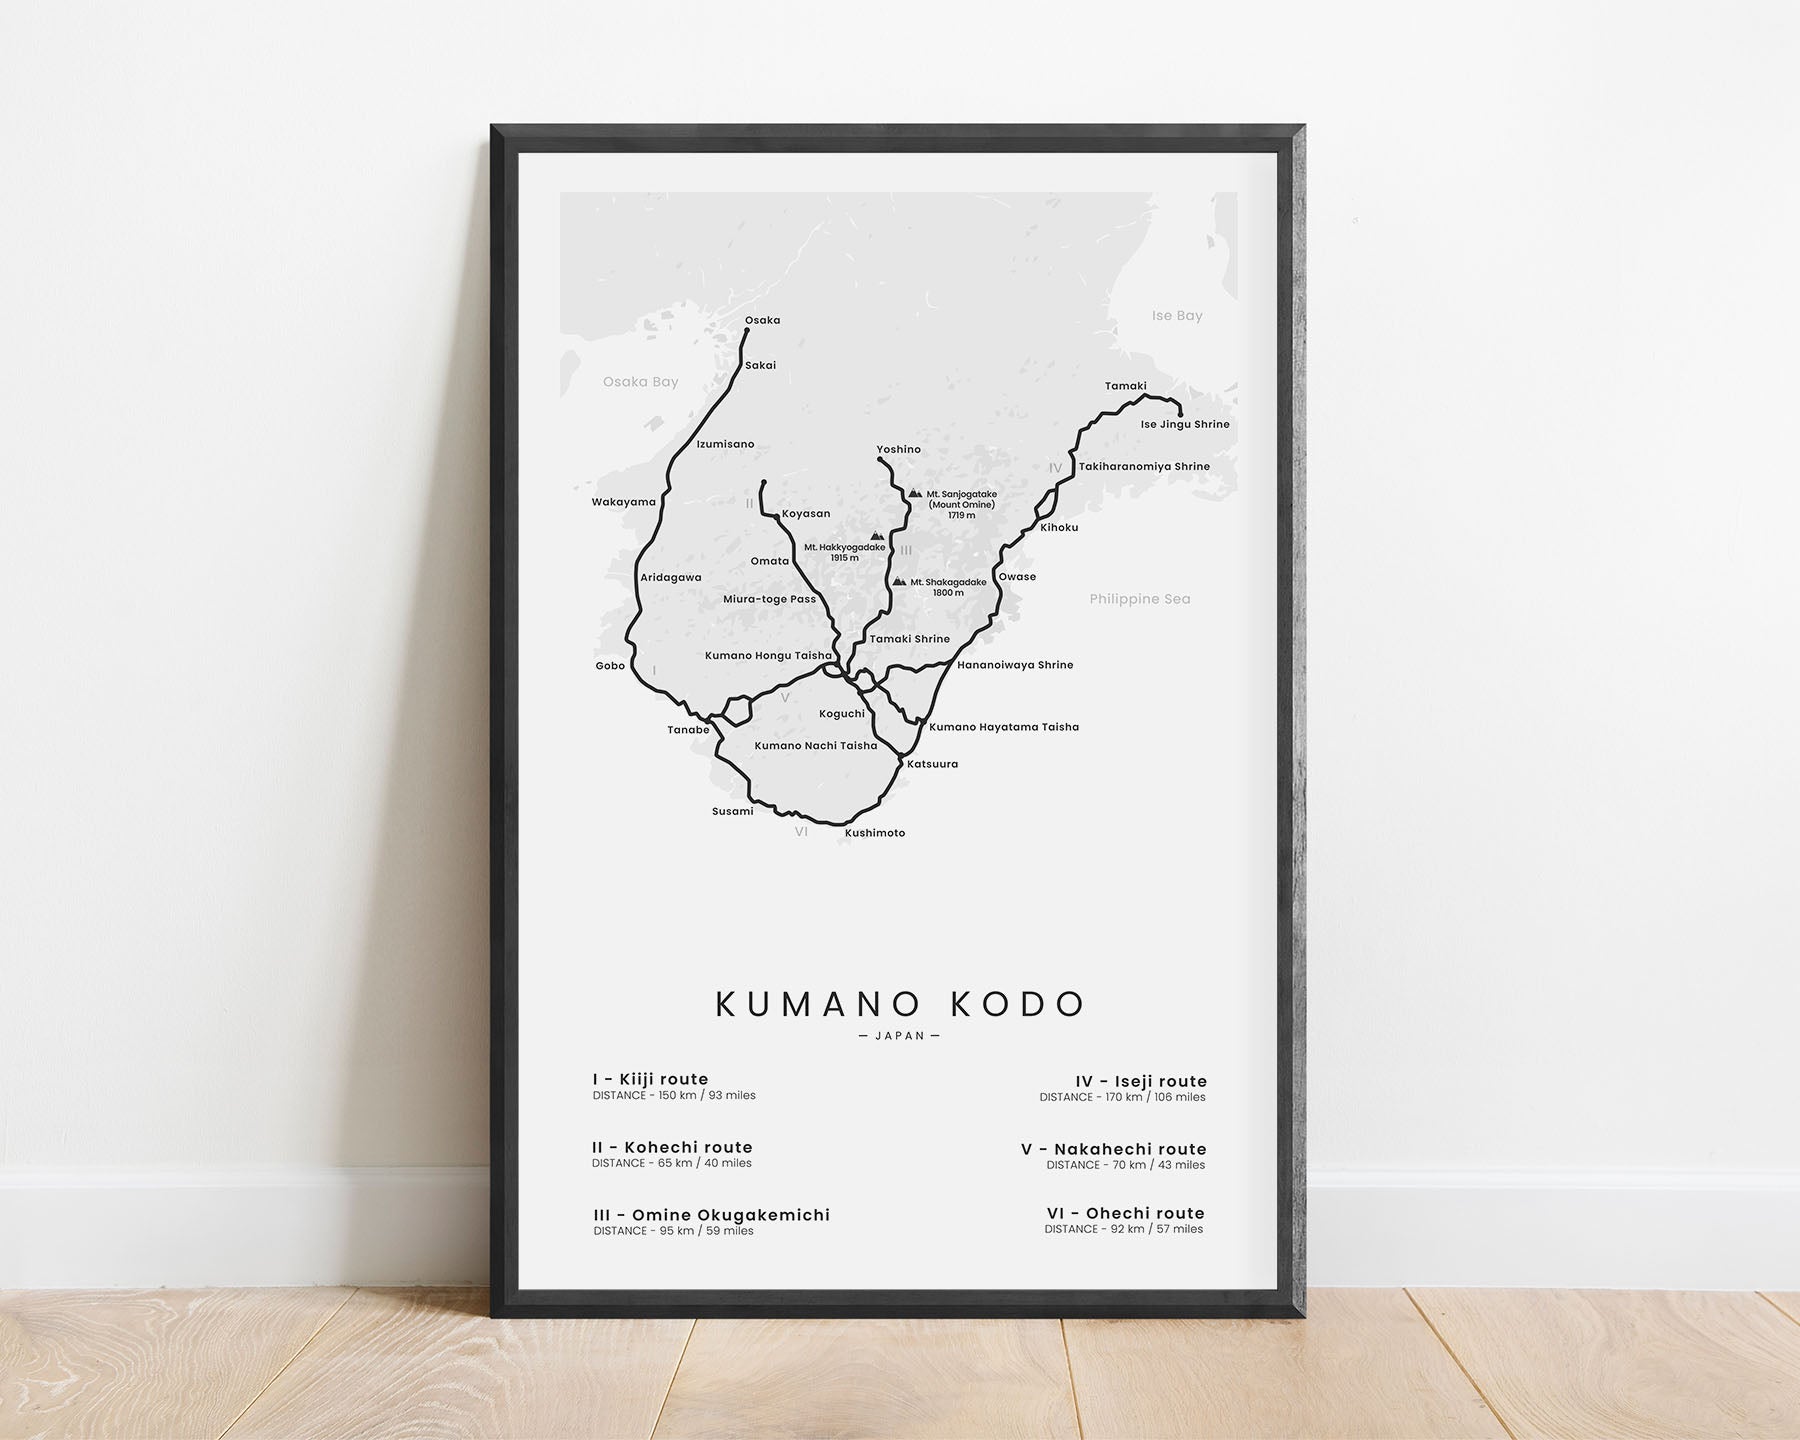 Kumano Kodo (Japan) pilgrimage hike poster with white background